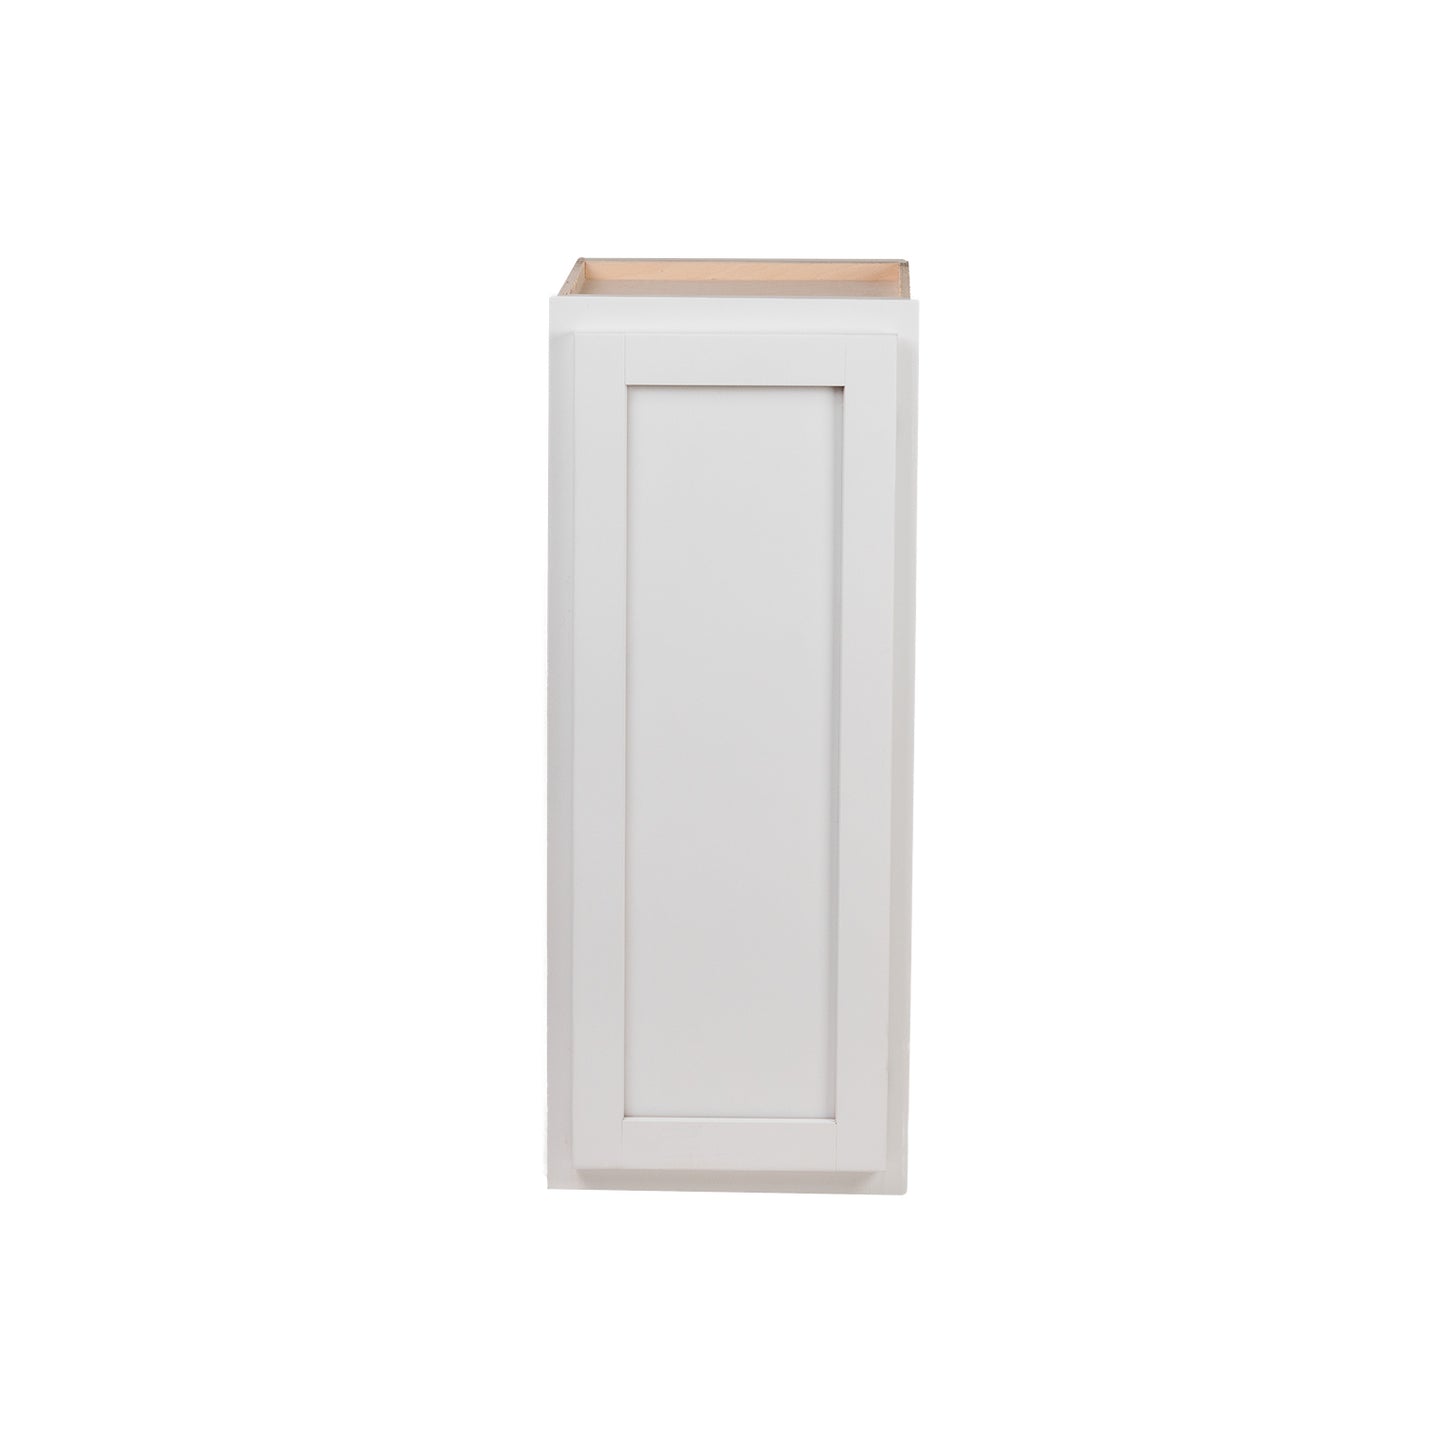 Quicklock RTA (Ready-to-Assemble) Pure White 24"Wx36"Hx12"D Wall Cabinet